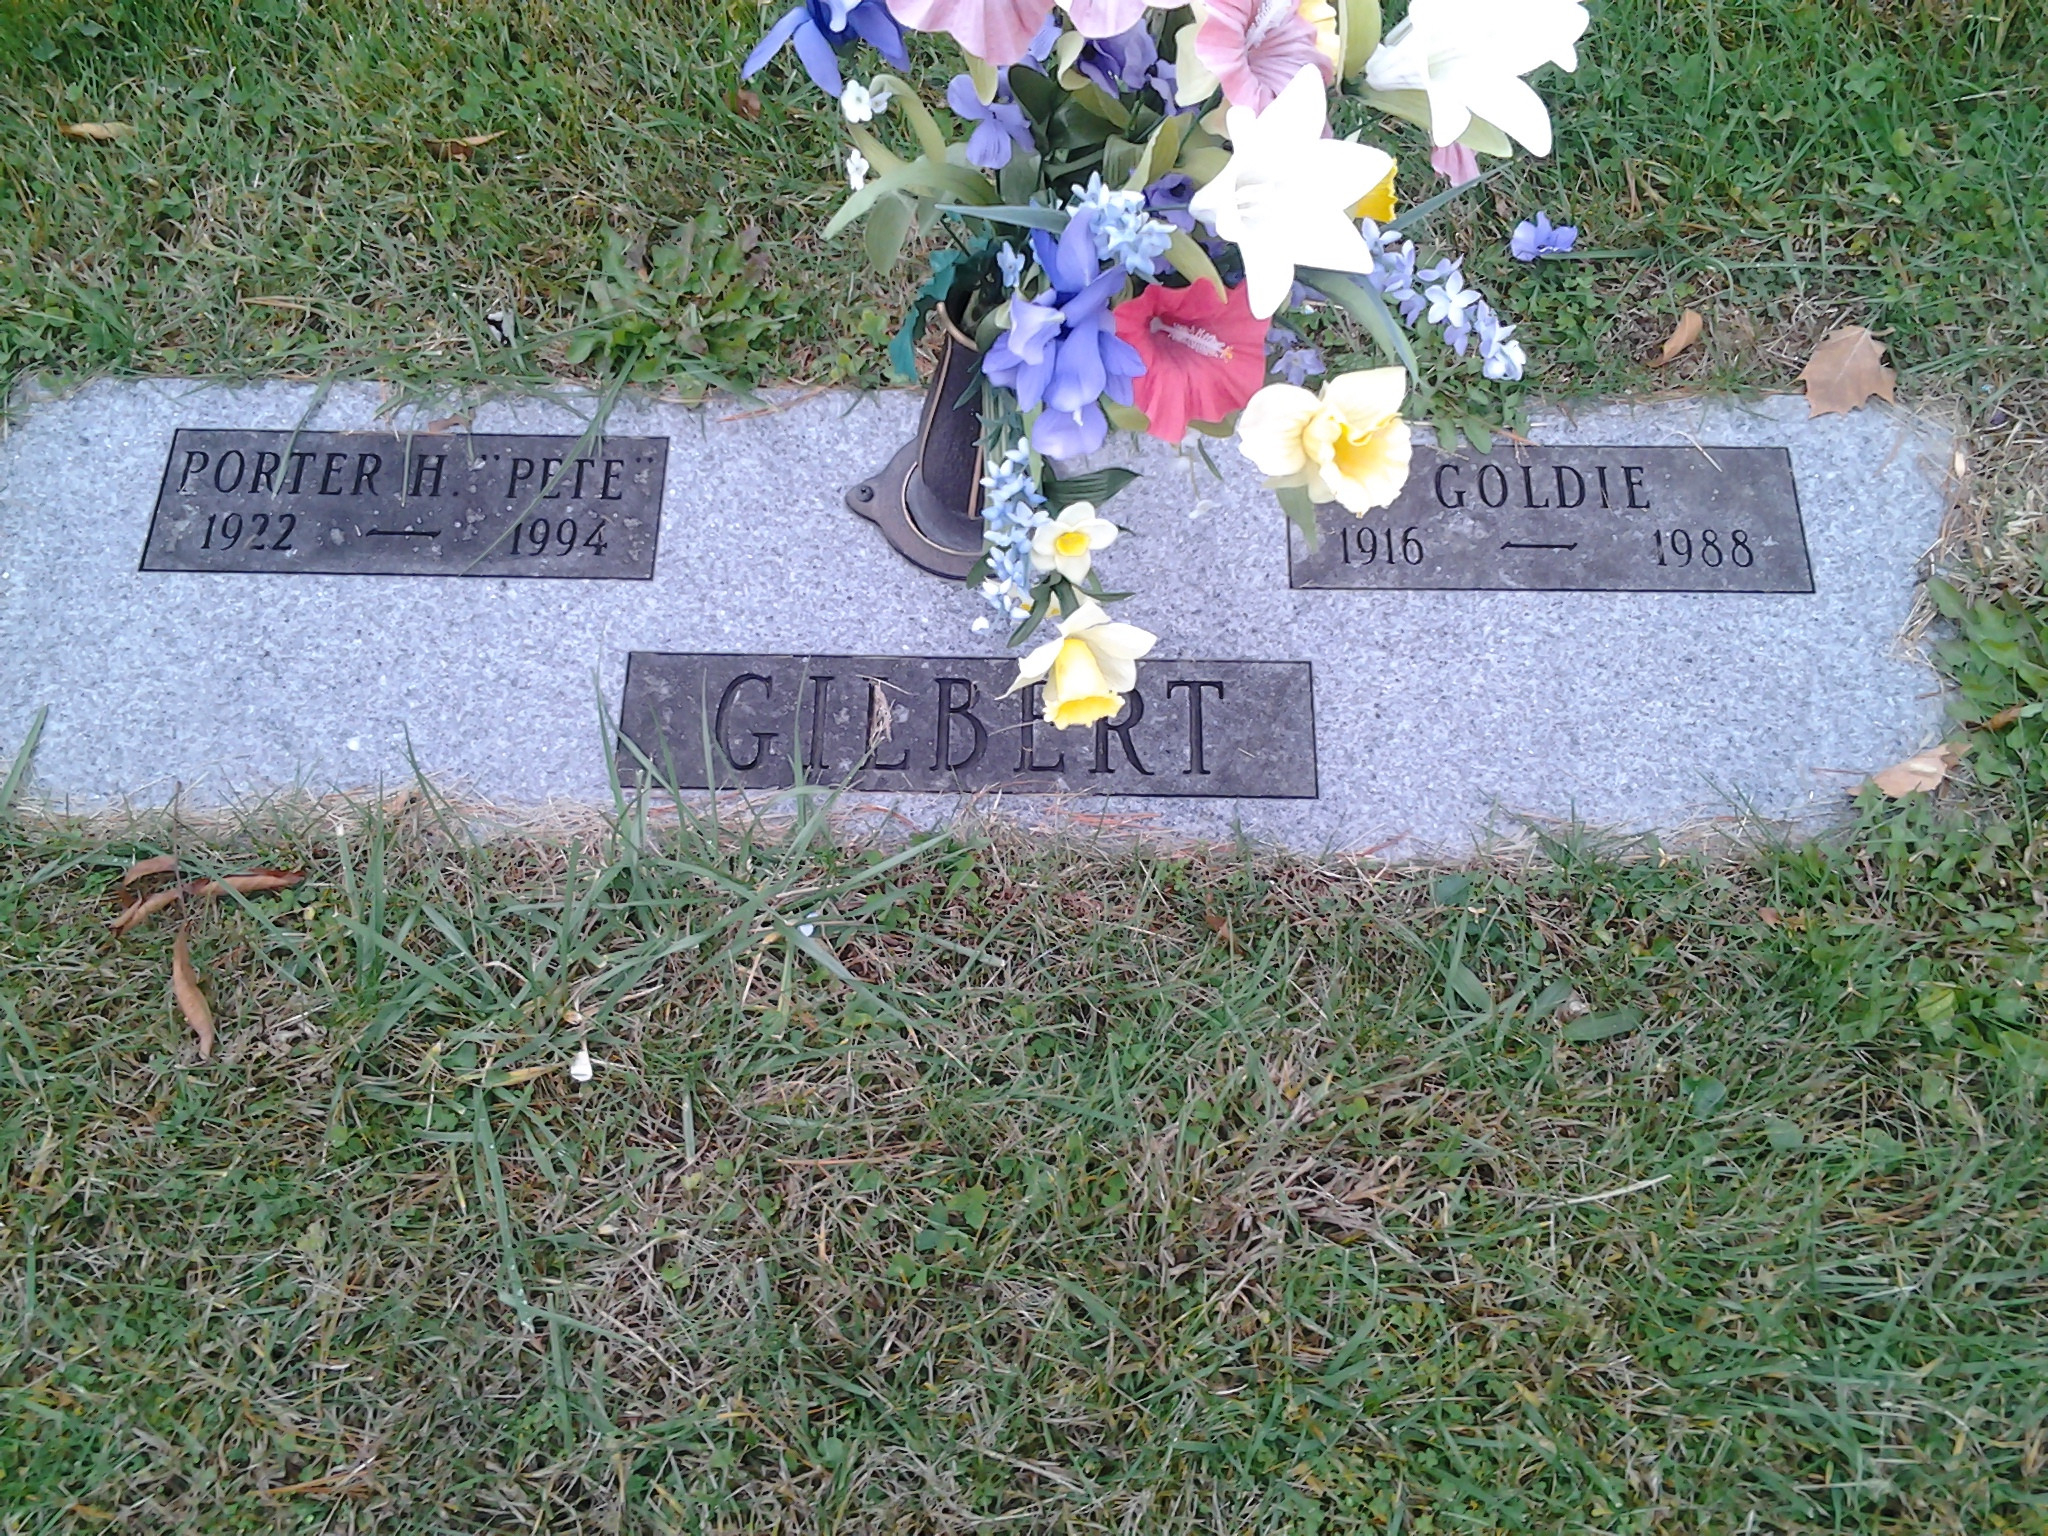 Grave of Goldie K. Gilbert